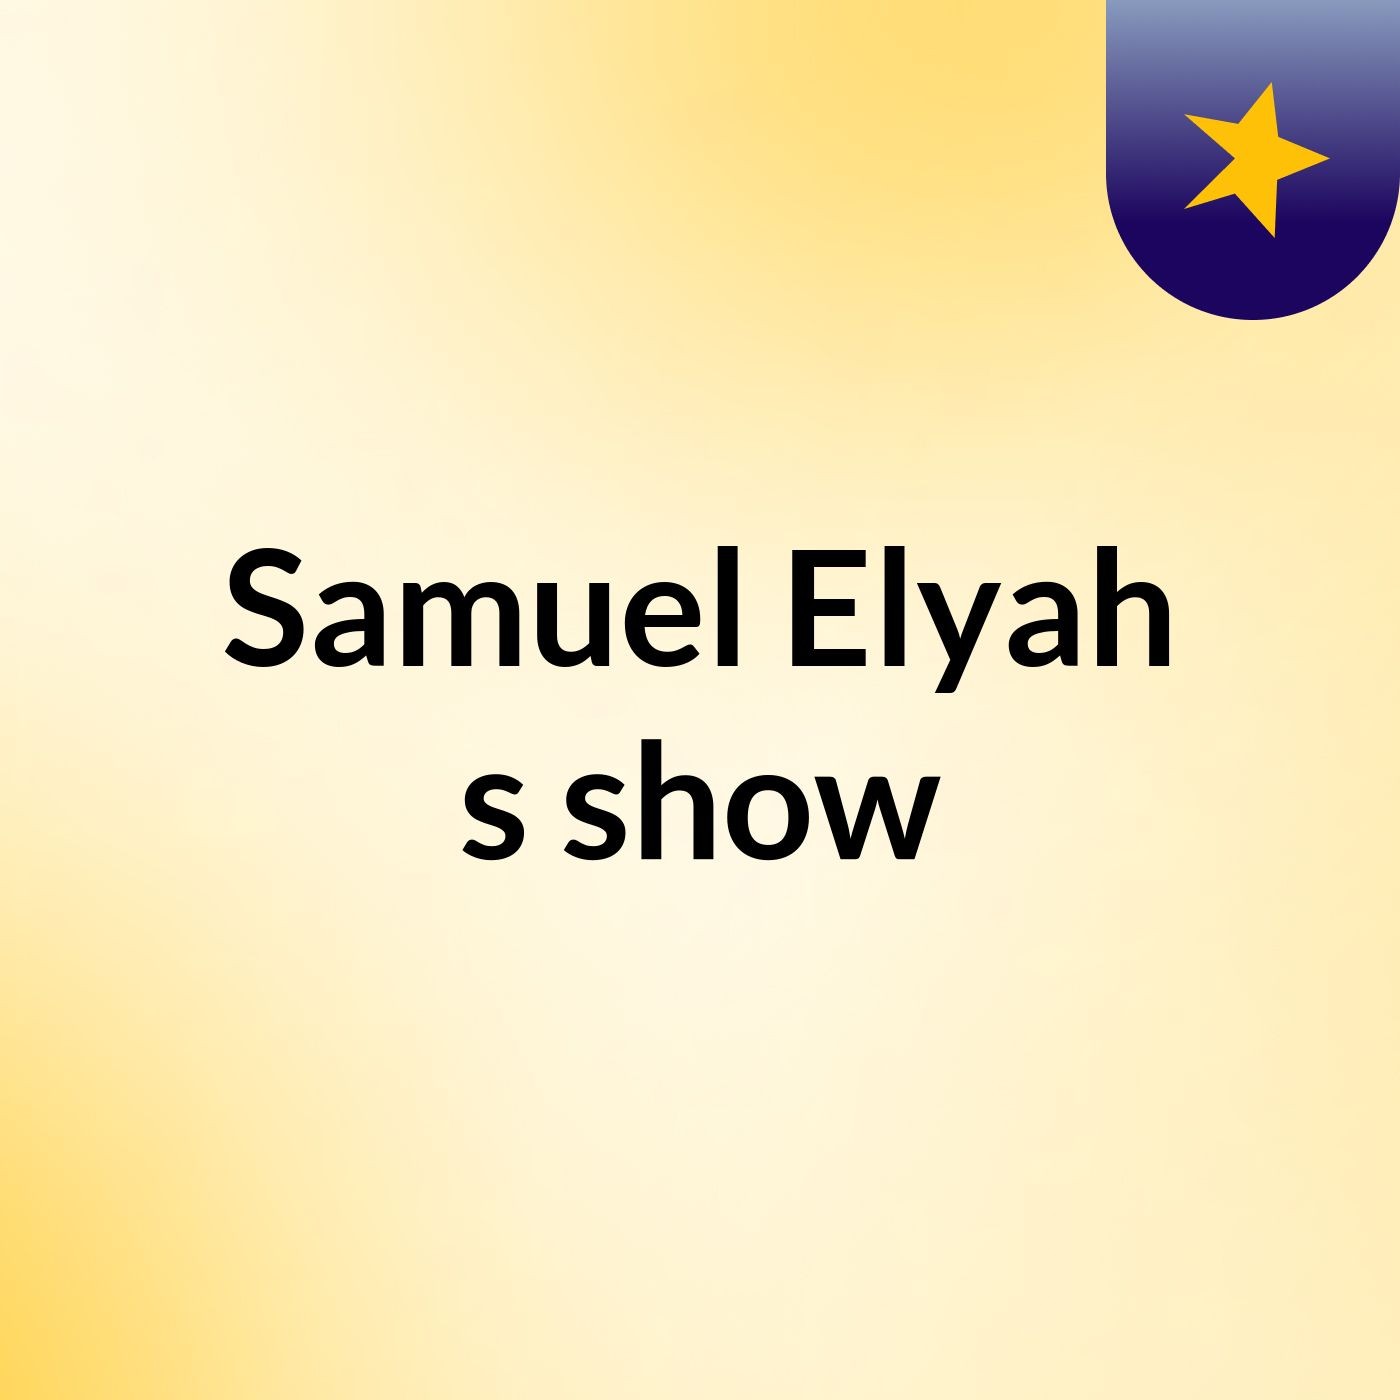 Samuel Elyah's show